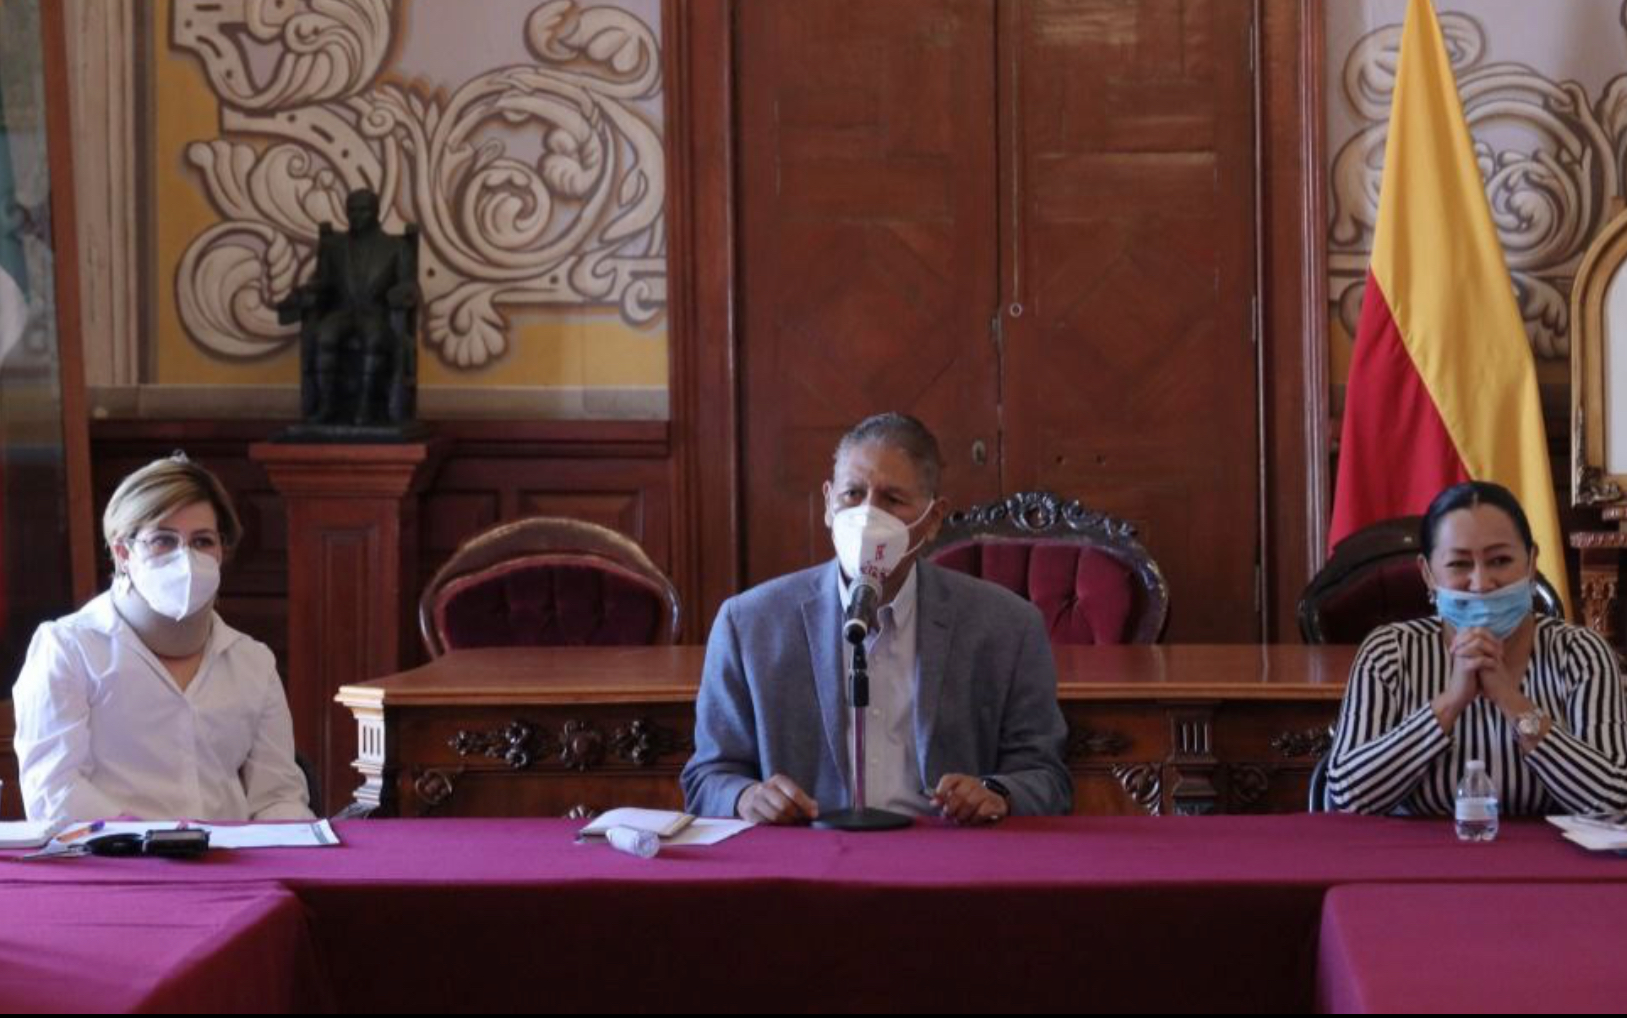 Humberto Arróniz installs National Council Selection Committee